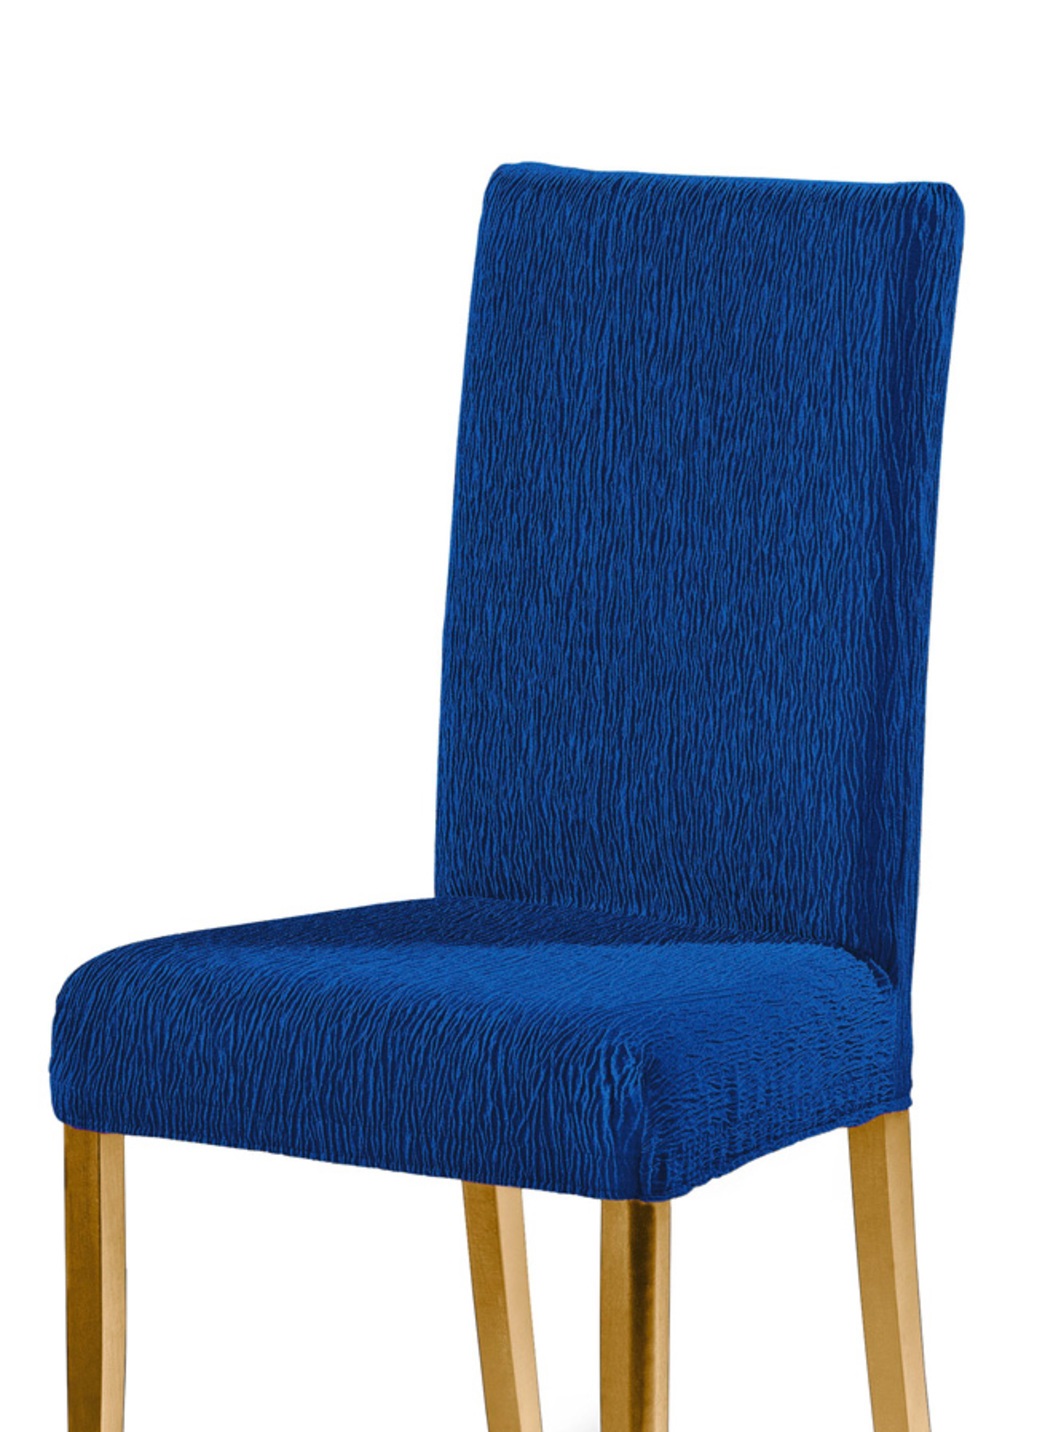 Komashop Potah na židli JARA Barva: Modrá